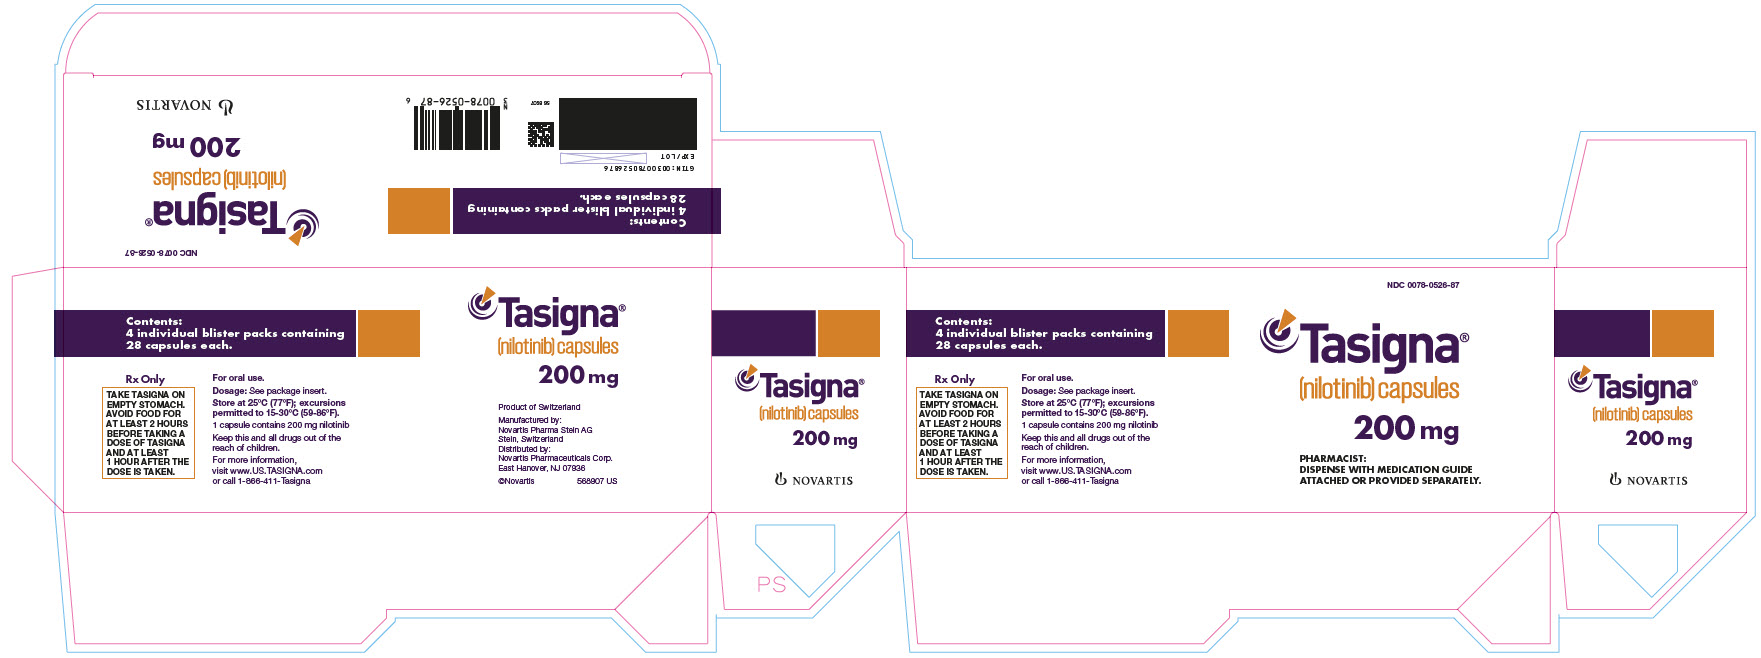 NDC 0078-0526-87
Tasigna
(nilotinib) capsules
200 mg
							